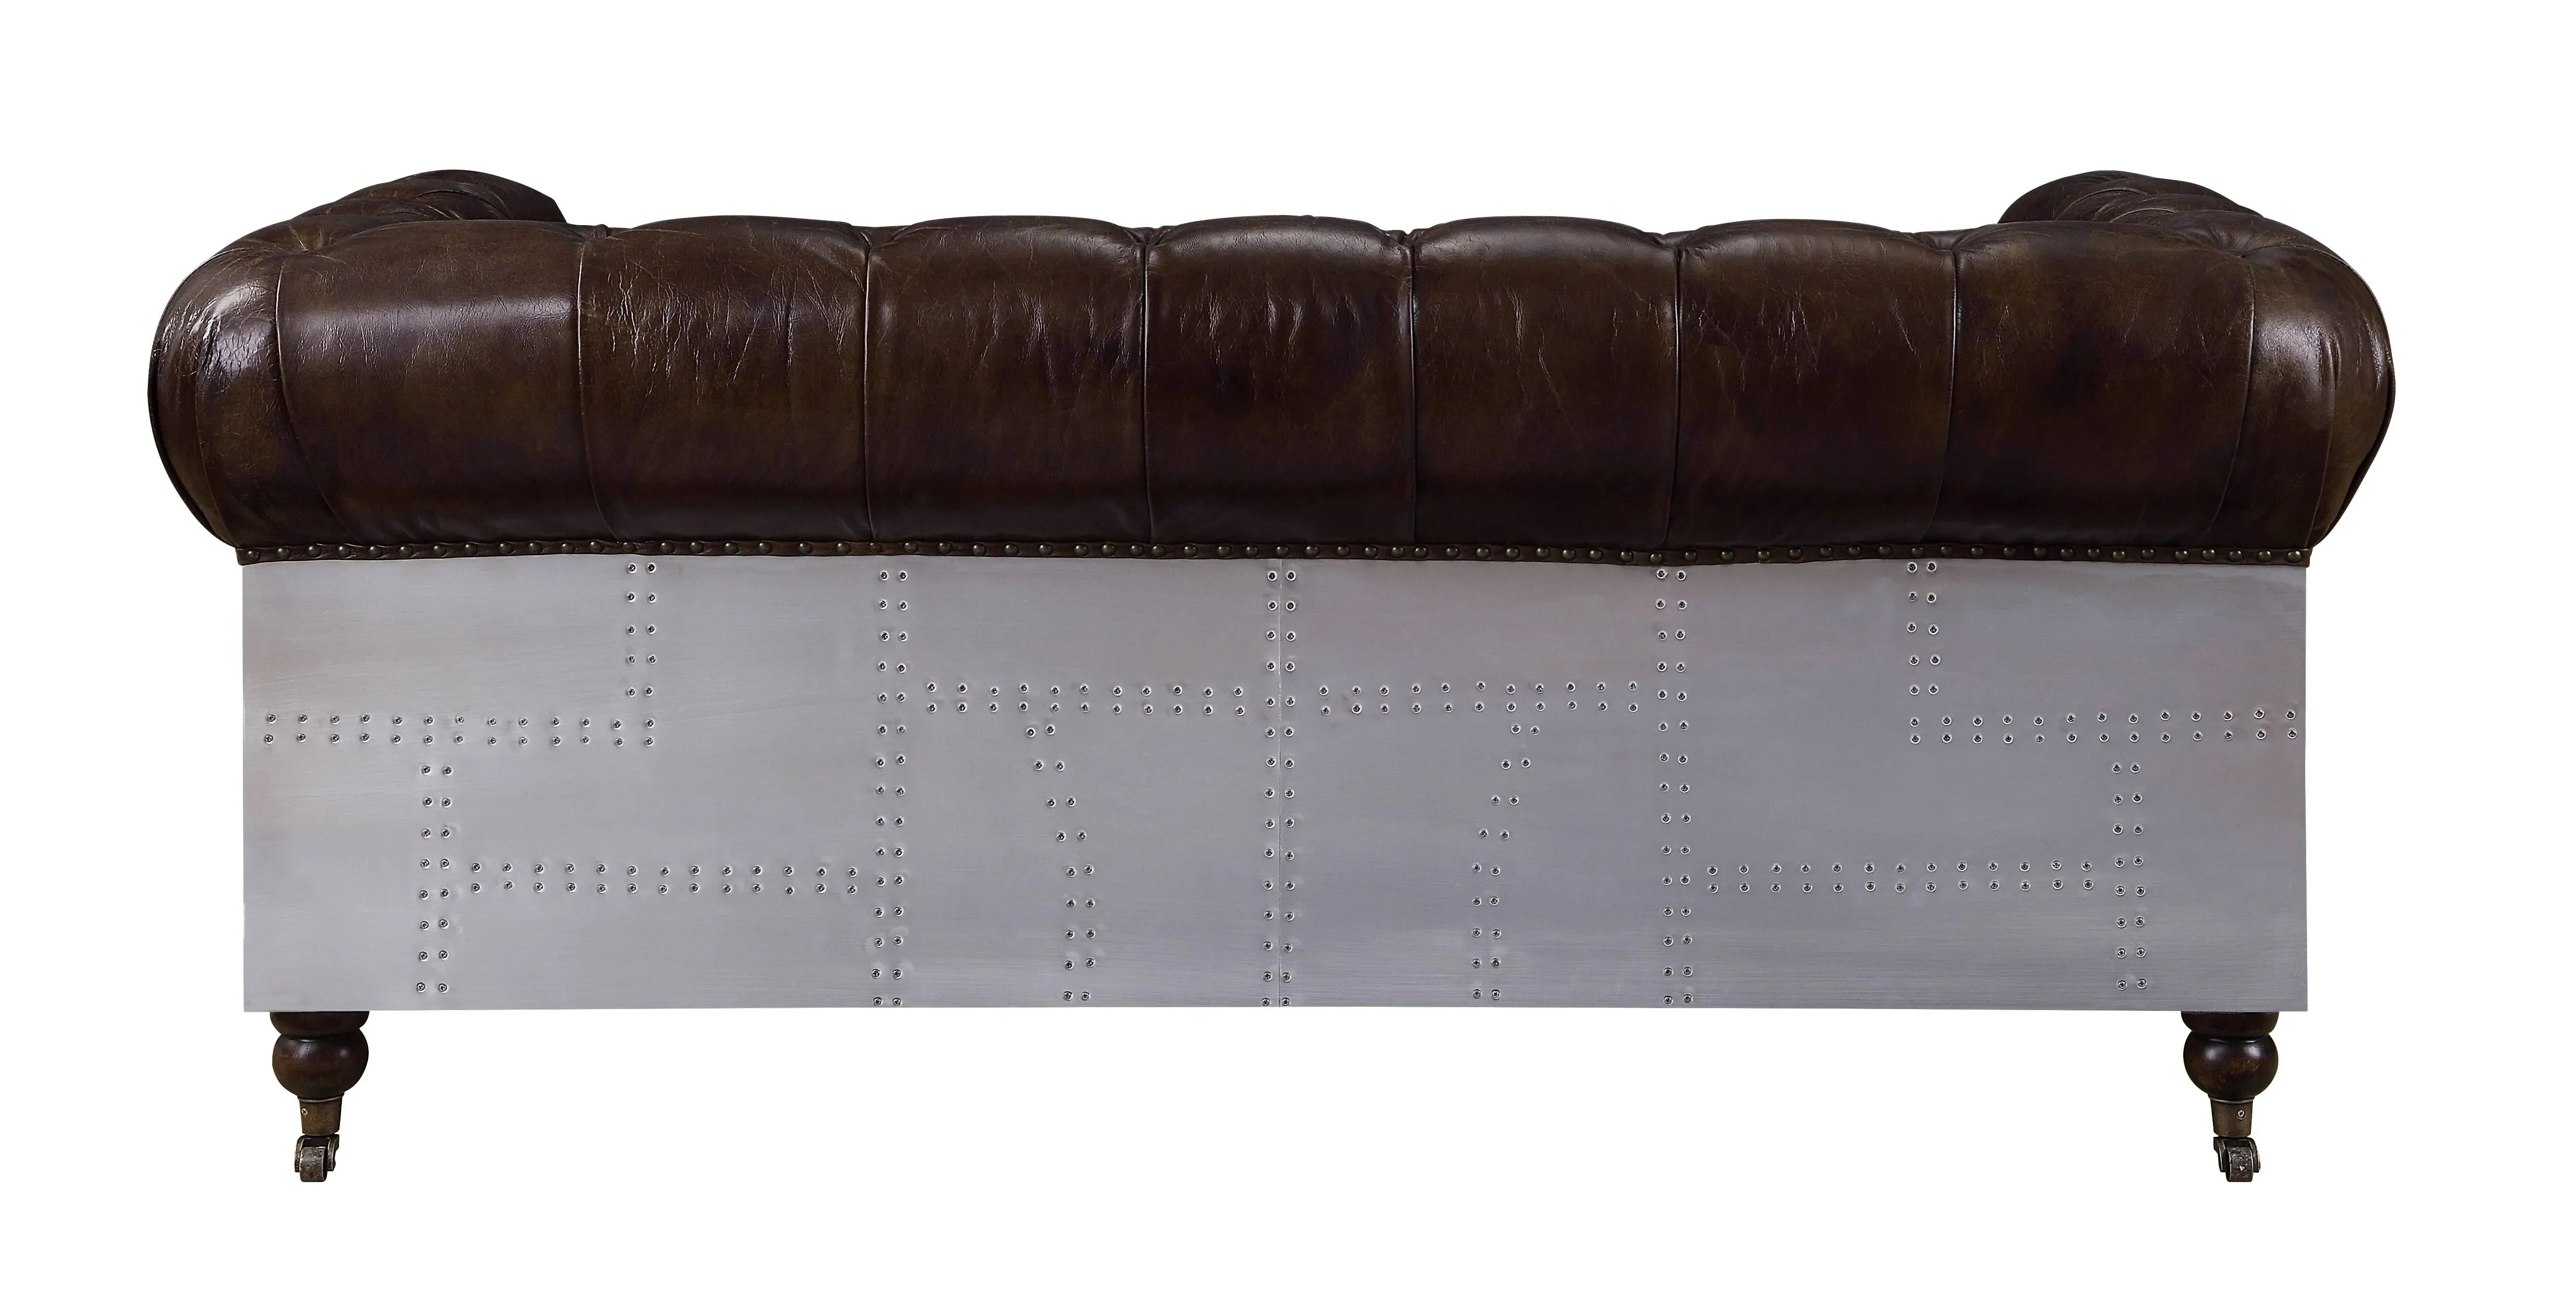 Aberdeen Vintage Brown Top Grain Leather Loveseat Model 56591 By ACME Furniture